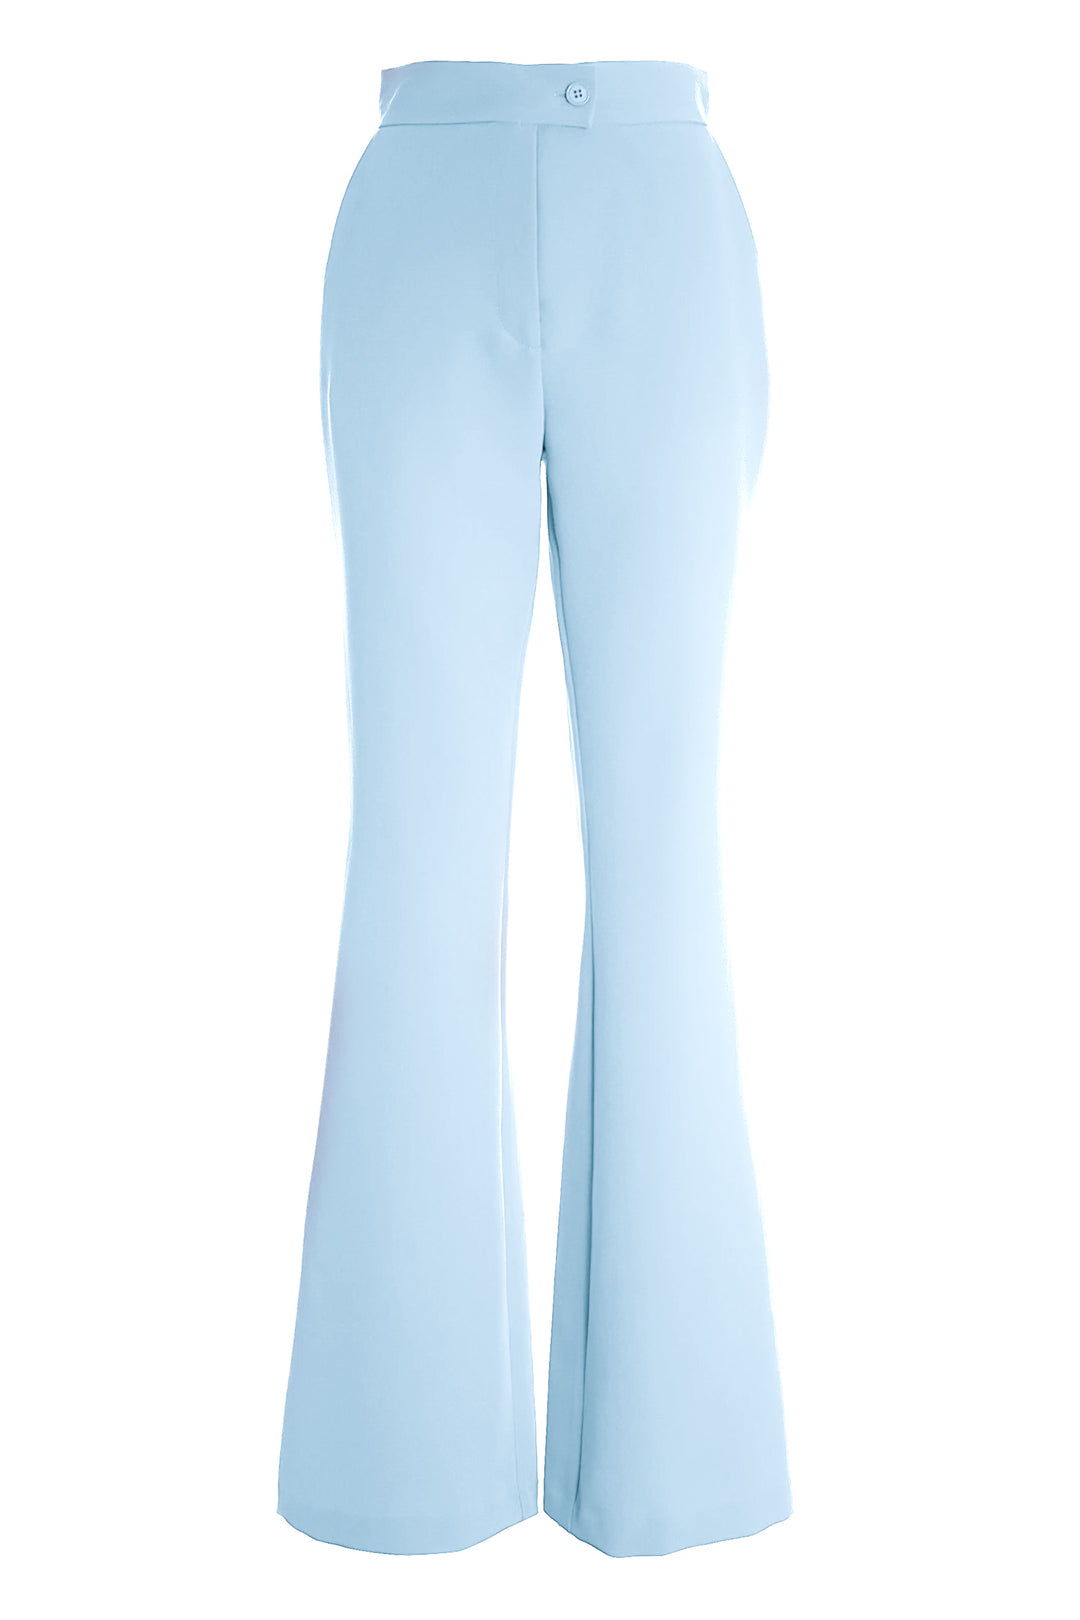 FRACOMINA Pantalone bootcut in tessuto tecnico light blue - Mancinelli 1954